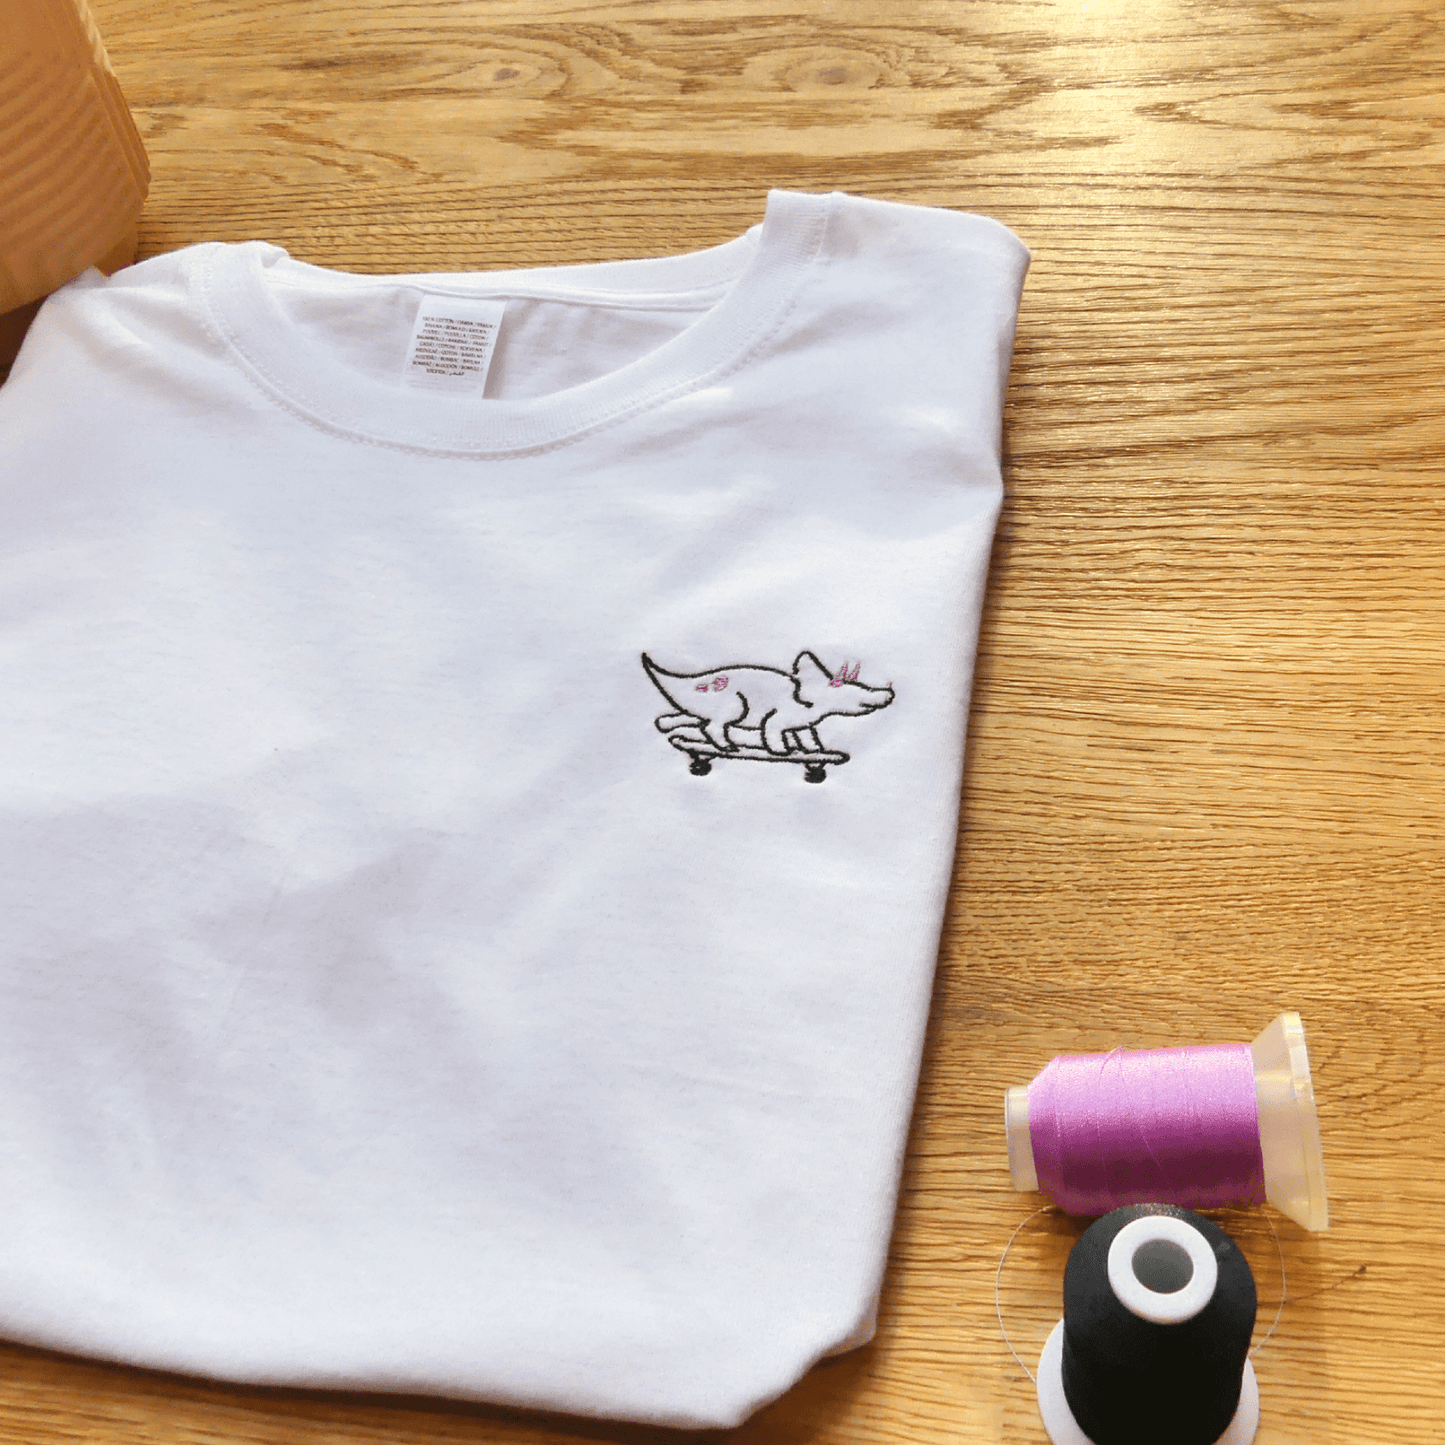 Skateboard Dinosaur Embroidered T-Shirt